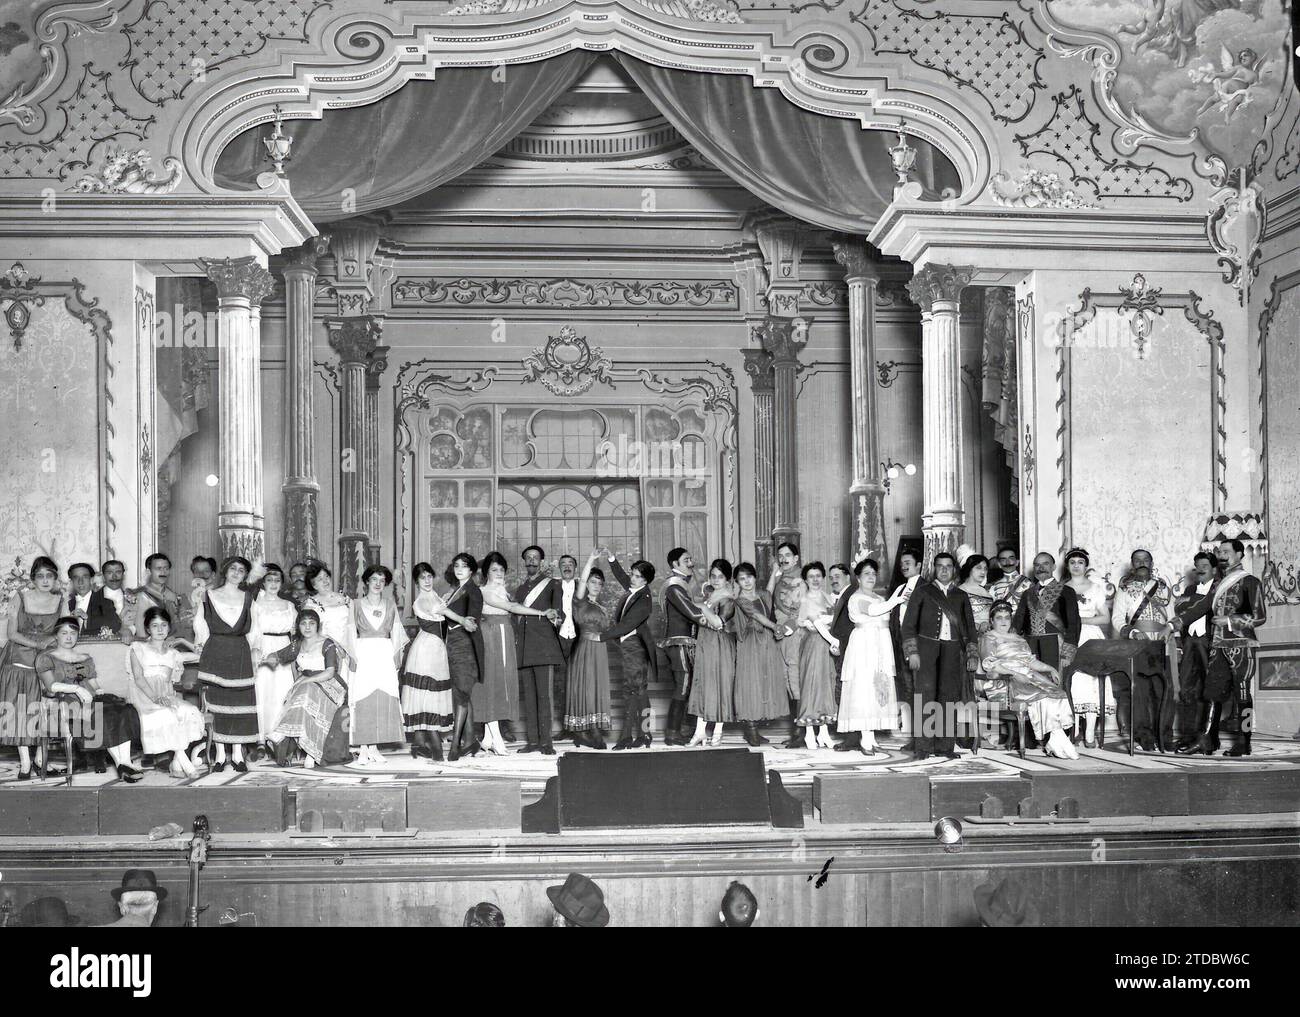 Madrid. March 1917. At the Teatro Real. A scene from Maestro Giordano's opera, 'Fedora'. Credit: Album / Archivo ABC / José Zegri Stock Photo